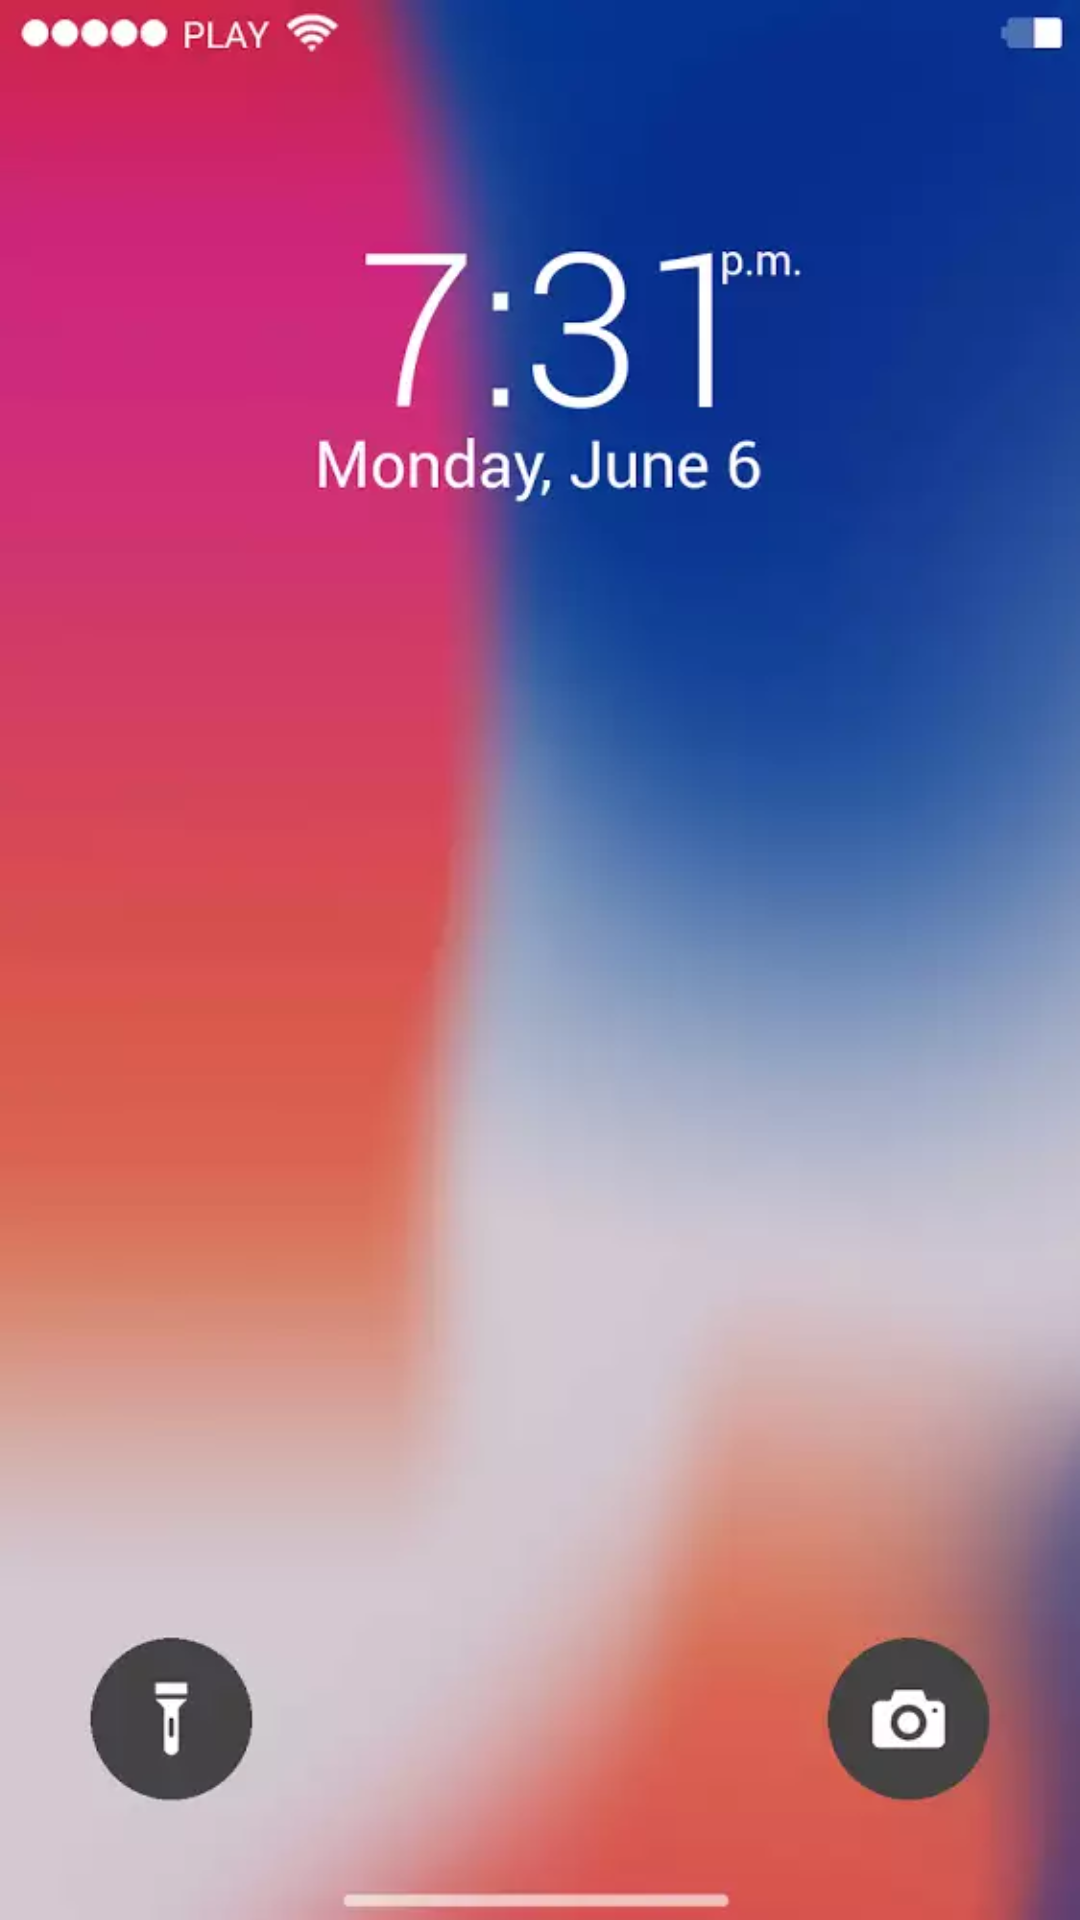 iphone 11 lock screen wallpaper